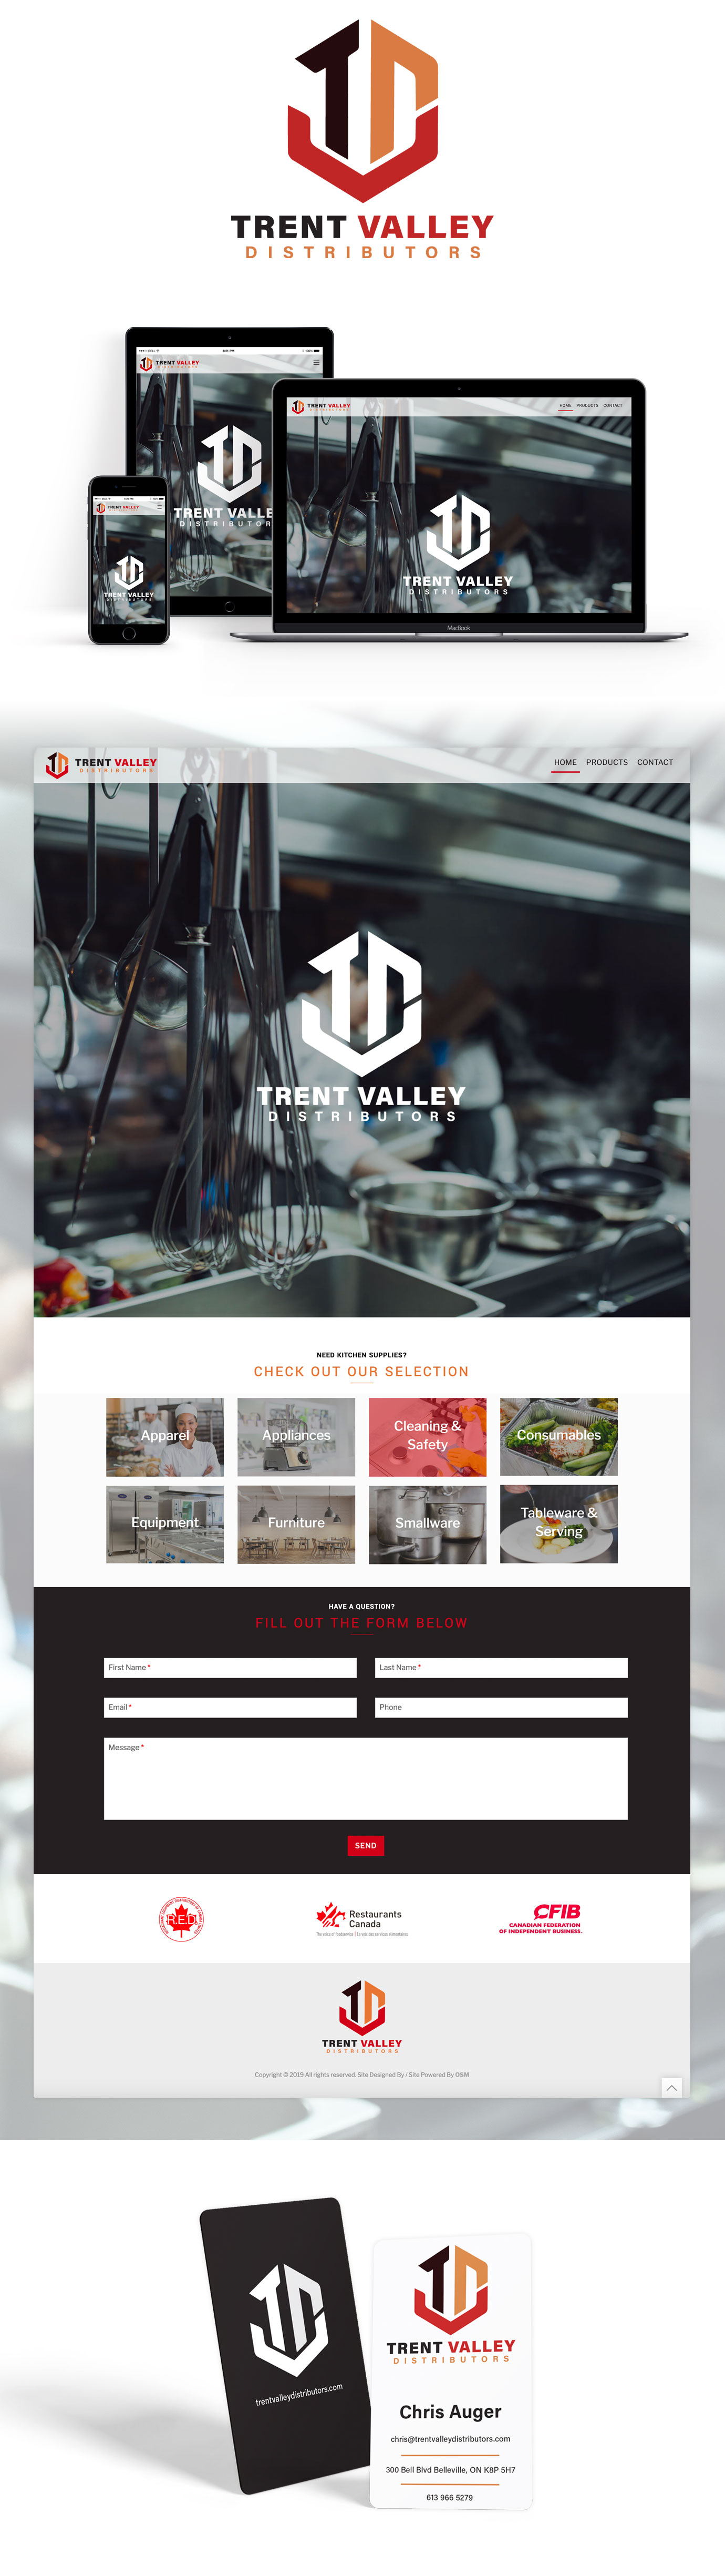 Tretn Valley Distributors Responsive website / Business Card / Branding